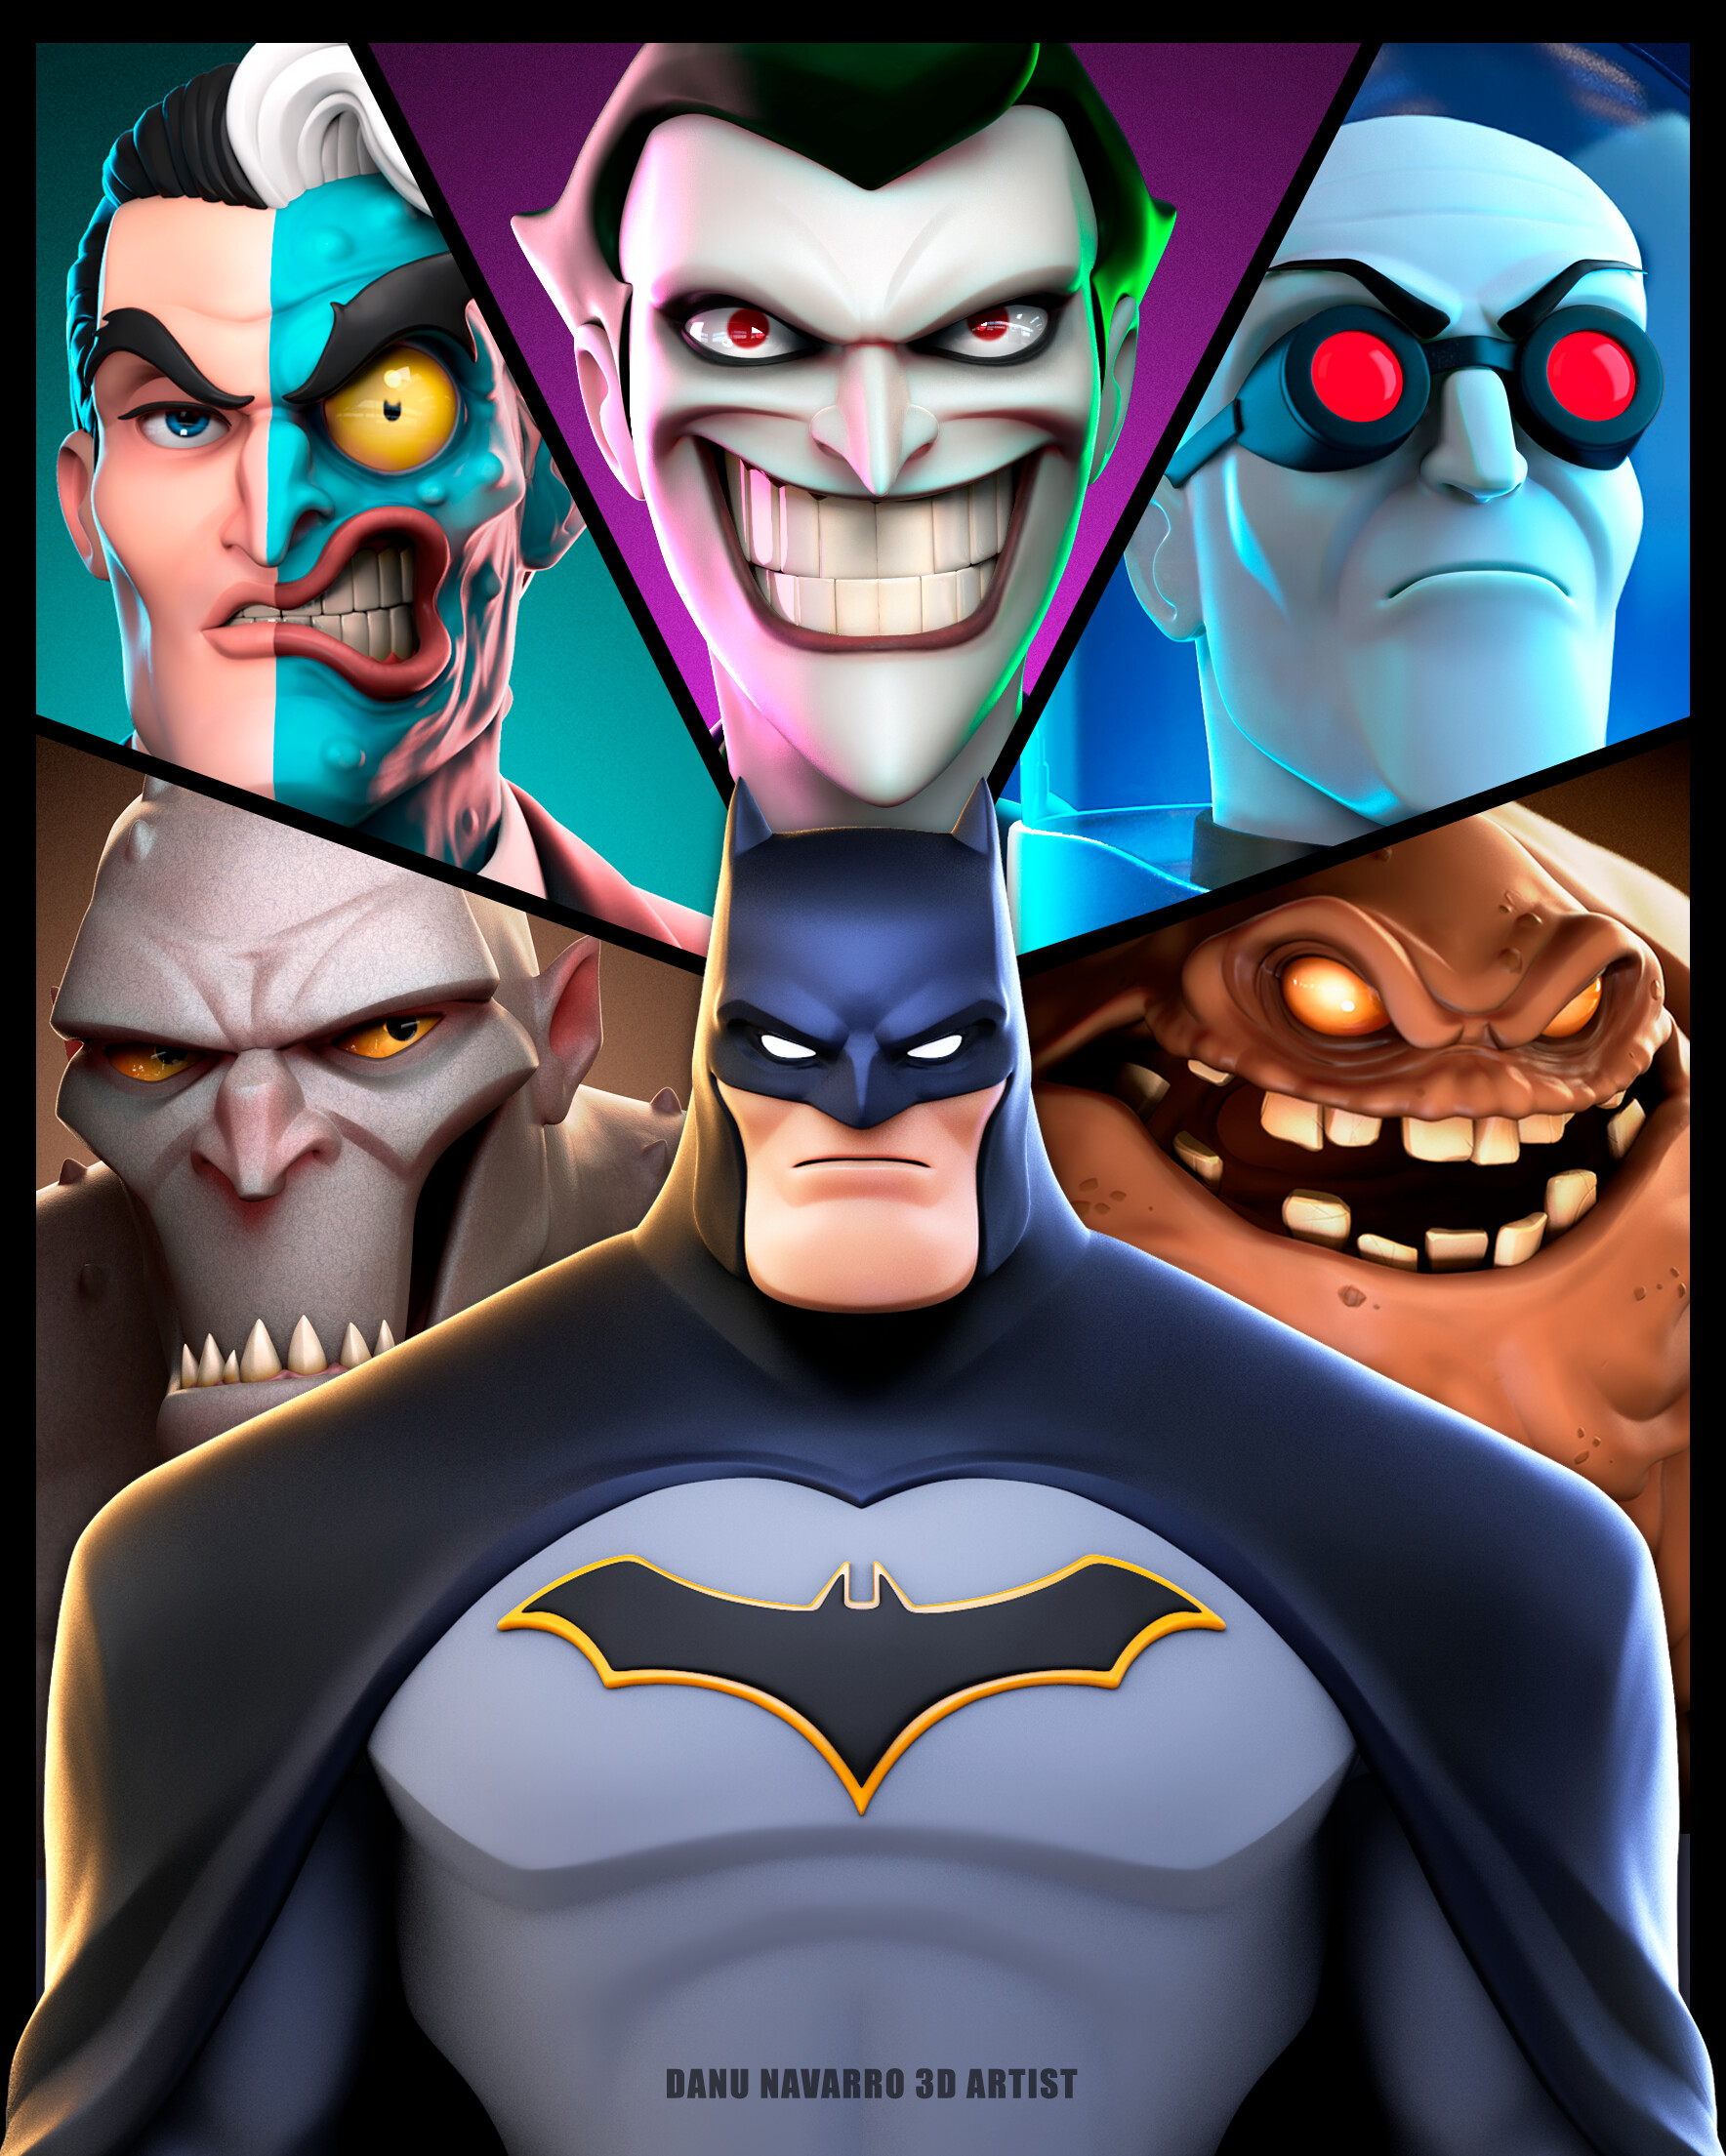 Danu Navarro - The new Batman animated series 2021